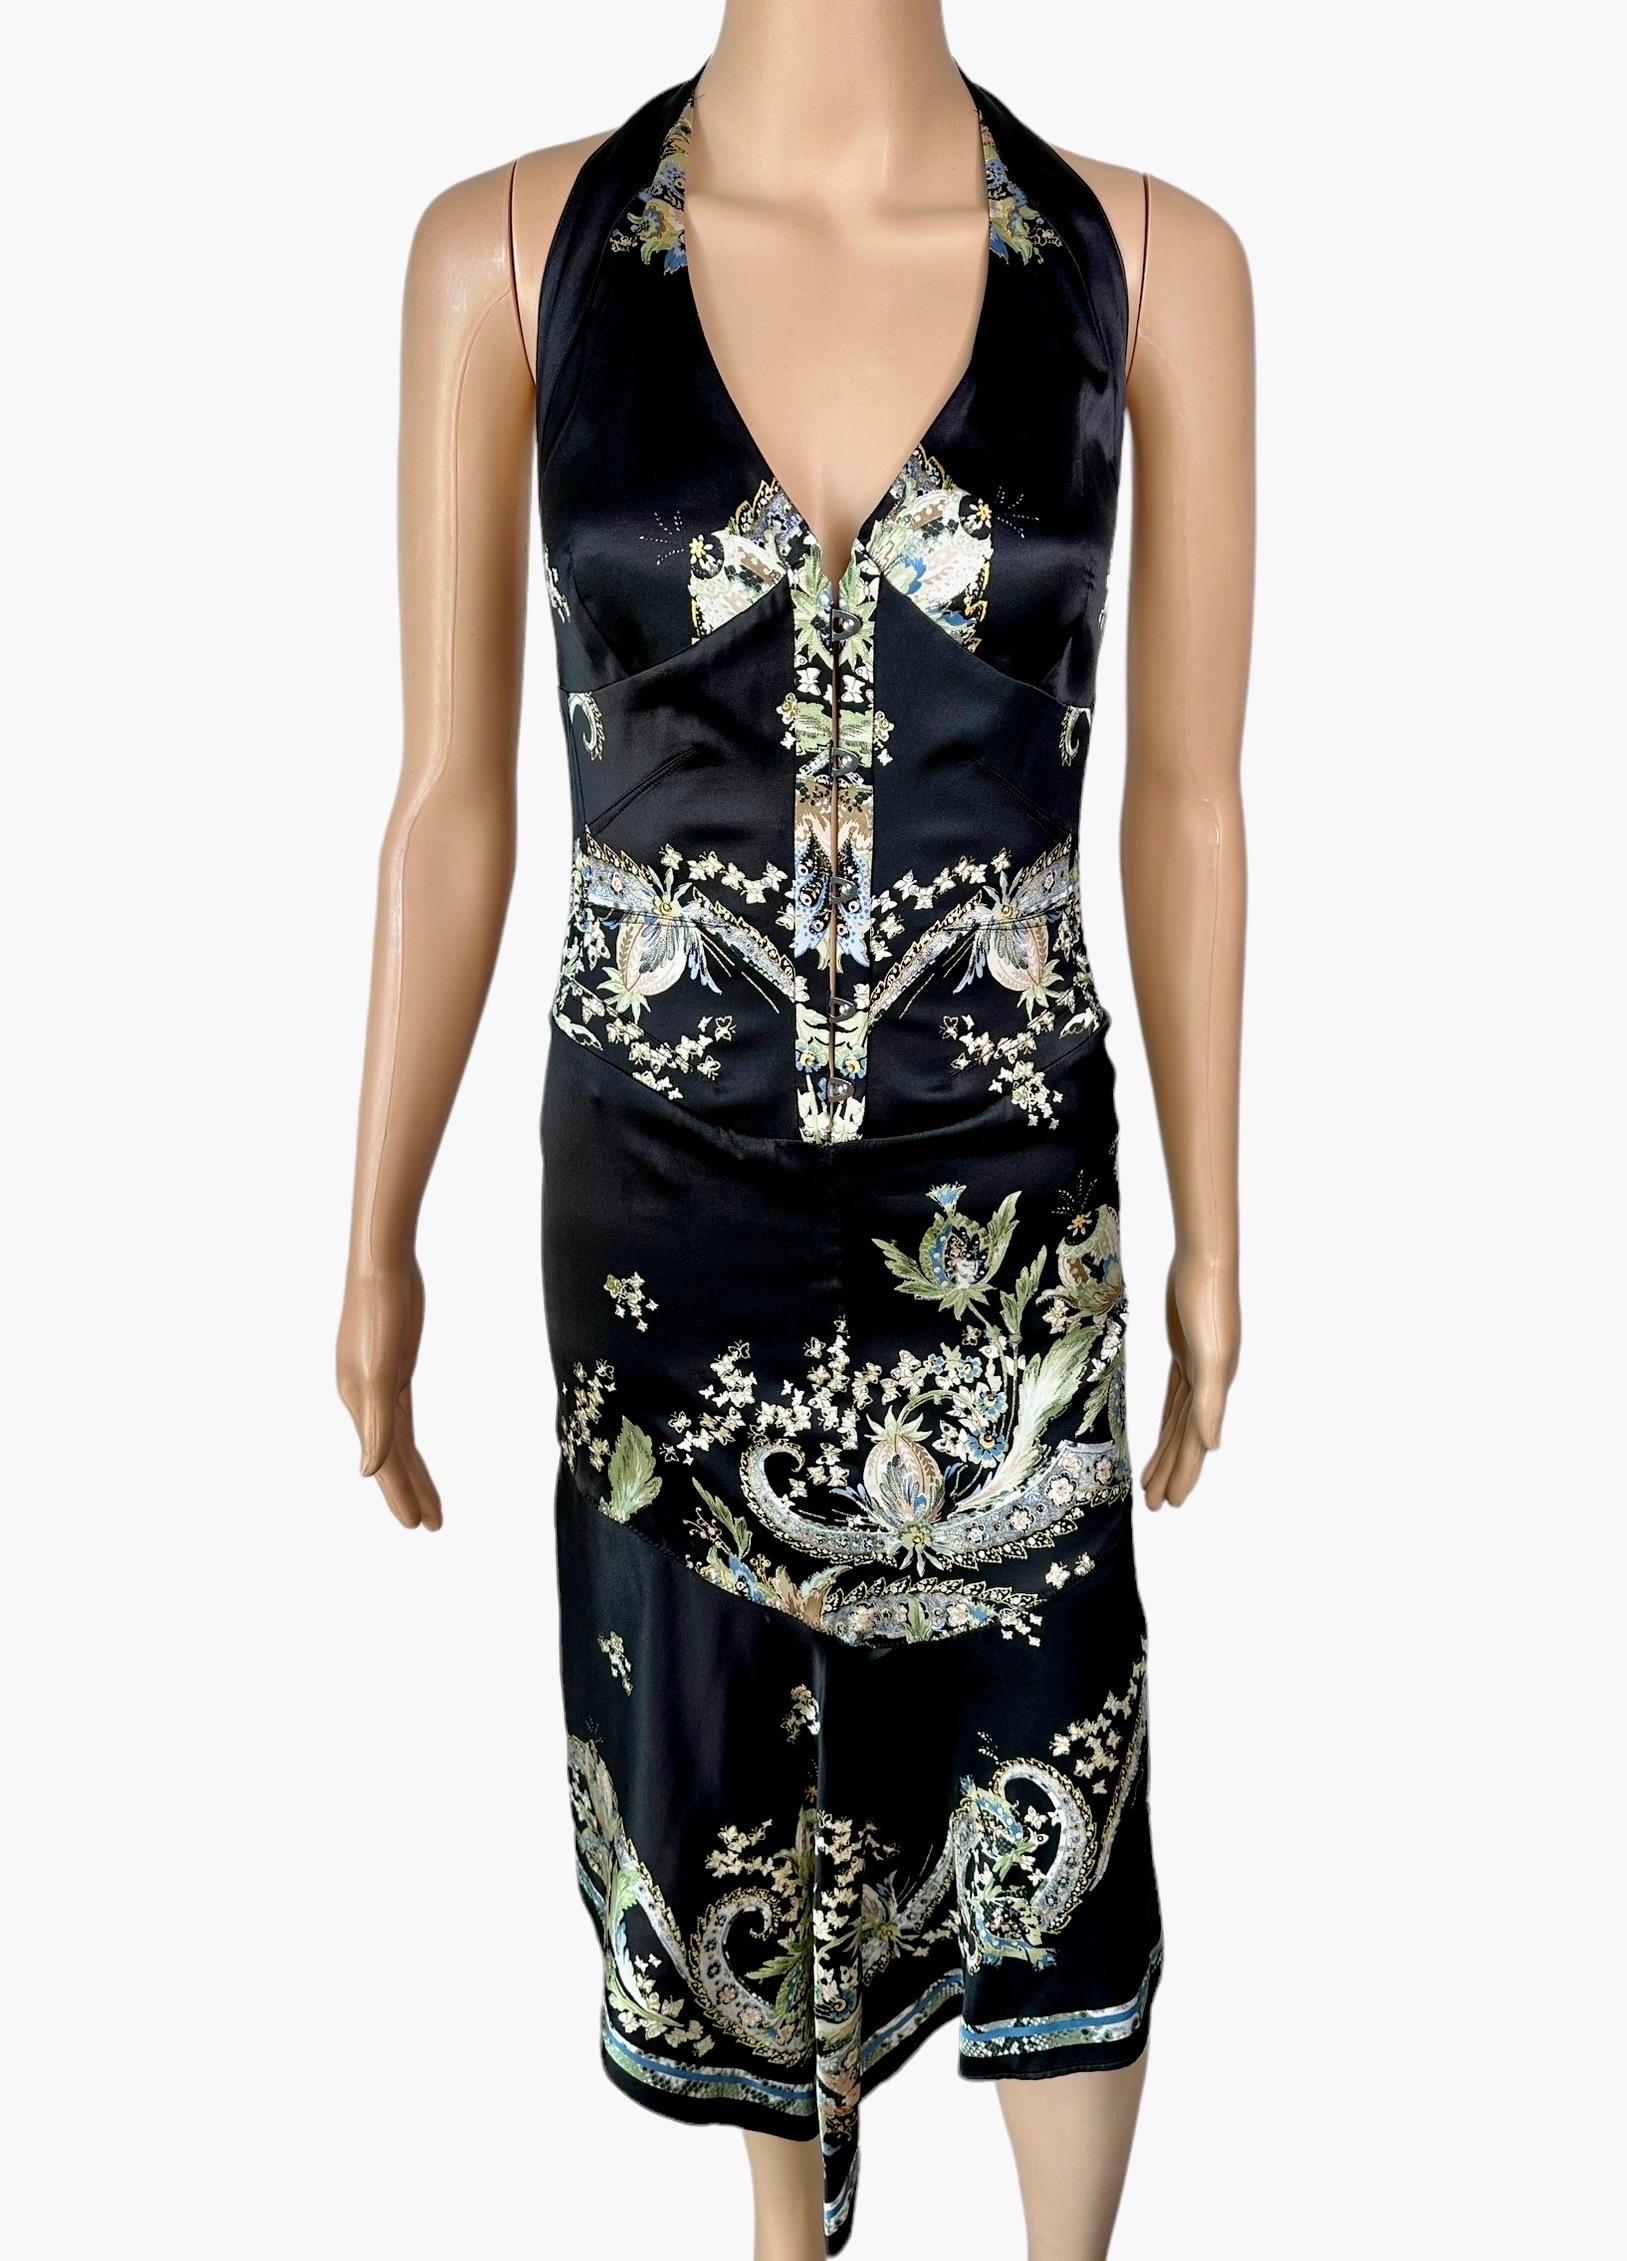 Roberto Cavalli S/S 2003 Corset Lace Up Chinoiserie Print Silk Asymmetric Dress For Sale 4